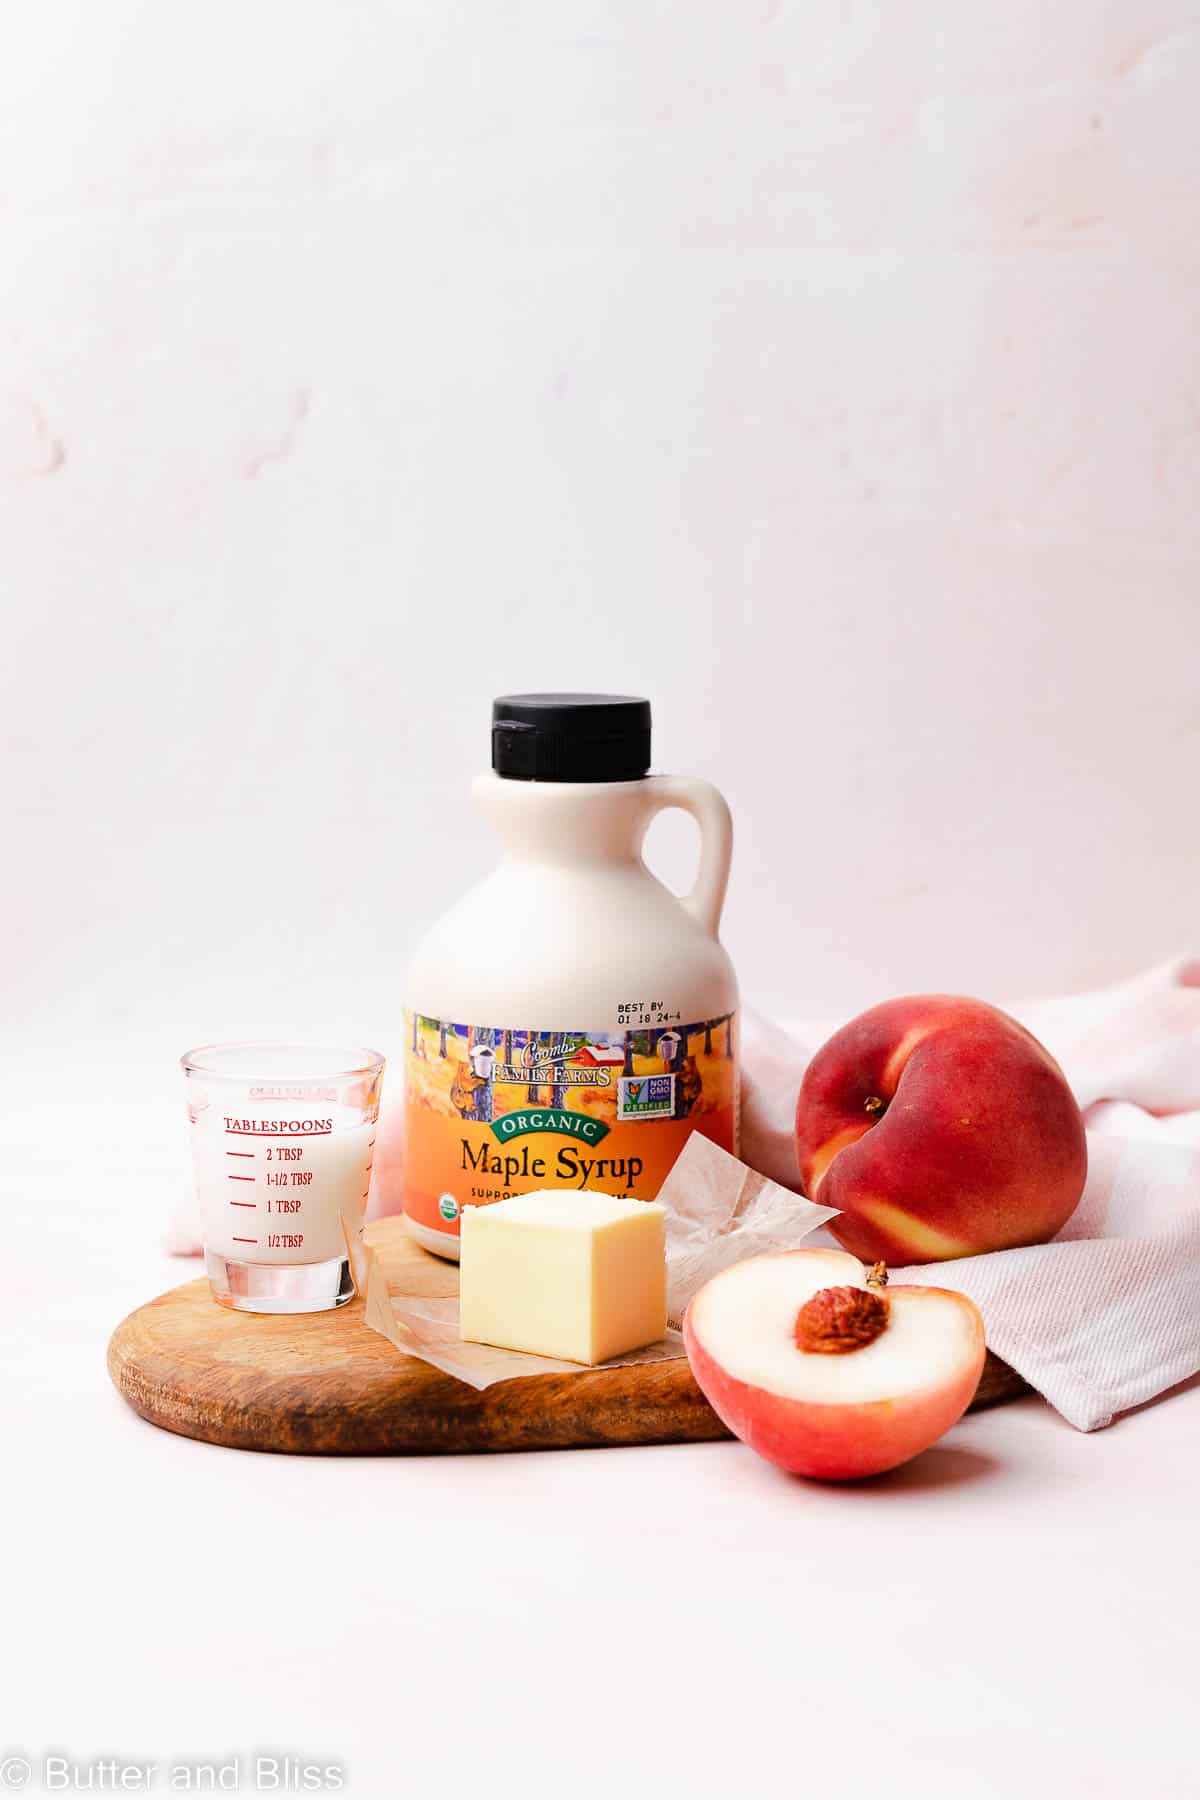 Ingredients for peach cobbler